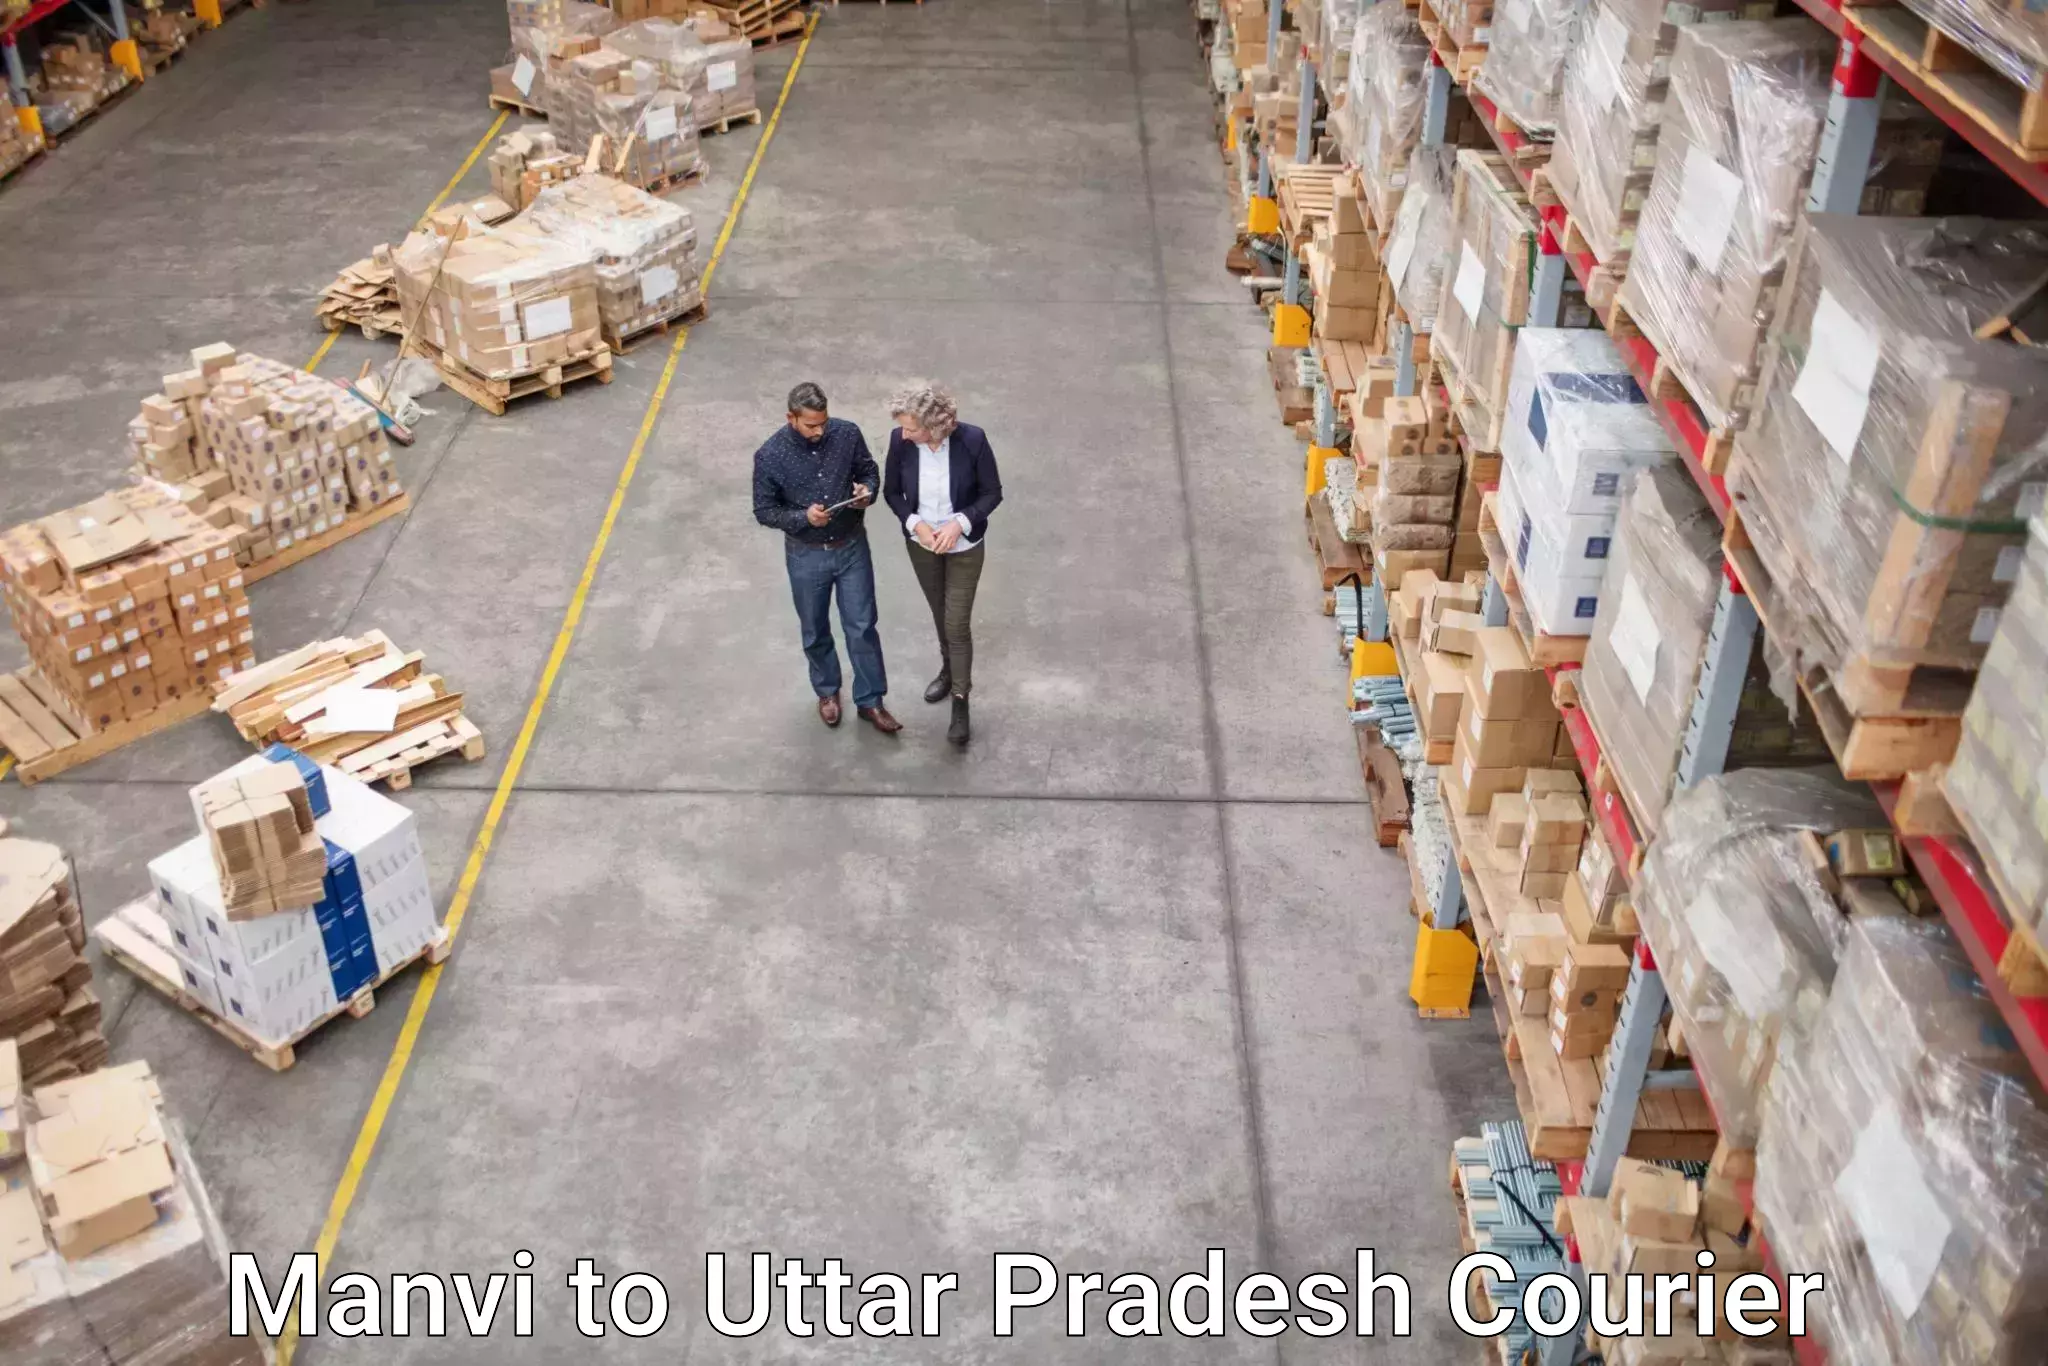 High-speed parcel service Manvi to Uttar Pradesh